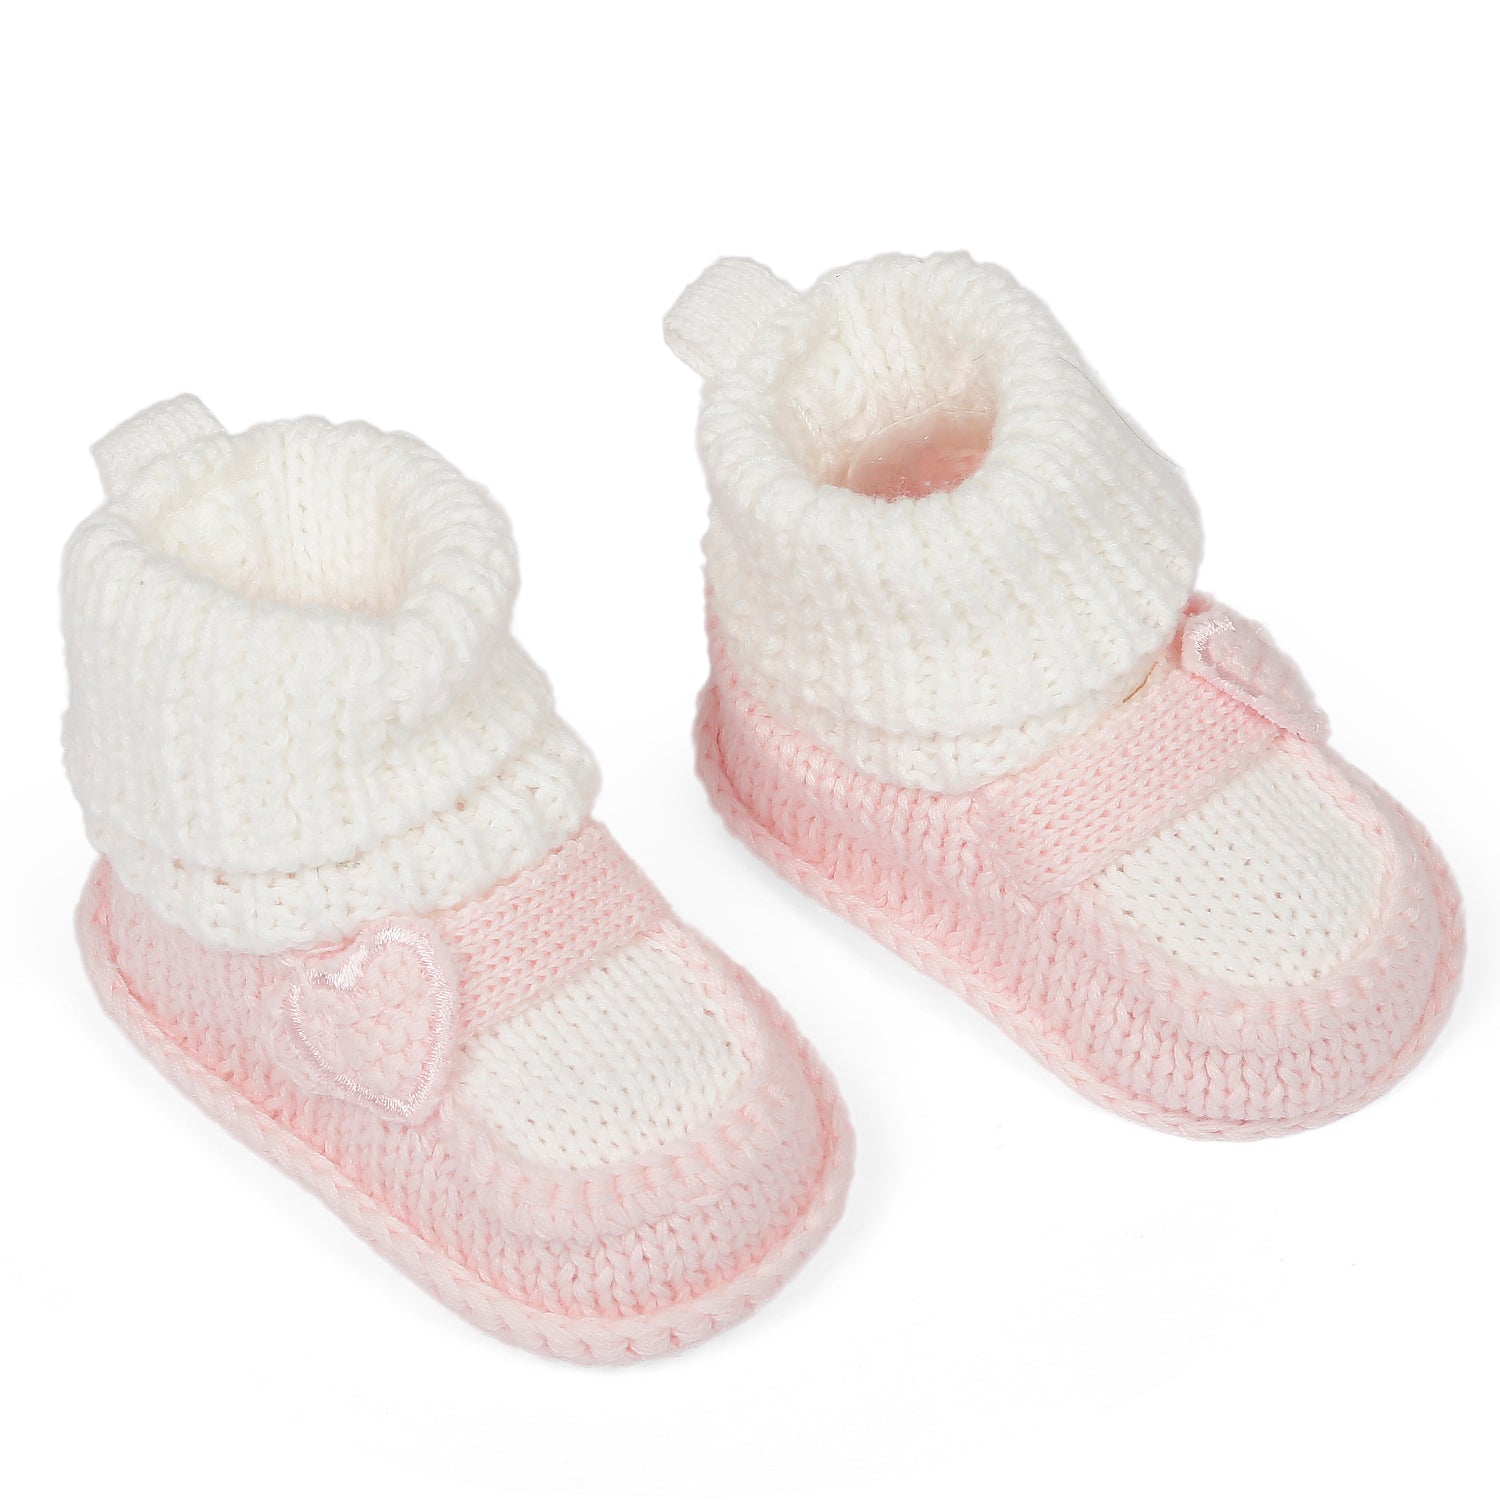 Sweetheart Newborn Crochet Socks Booties - Pink - Baby Moo